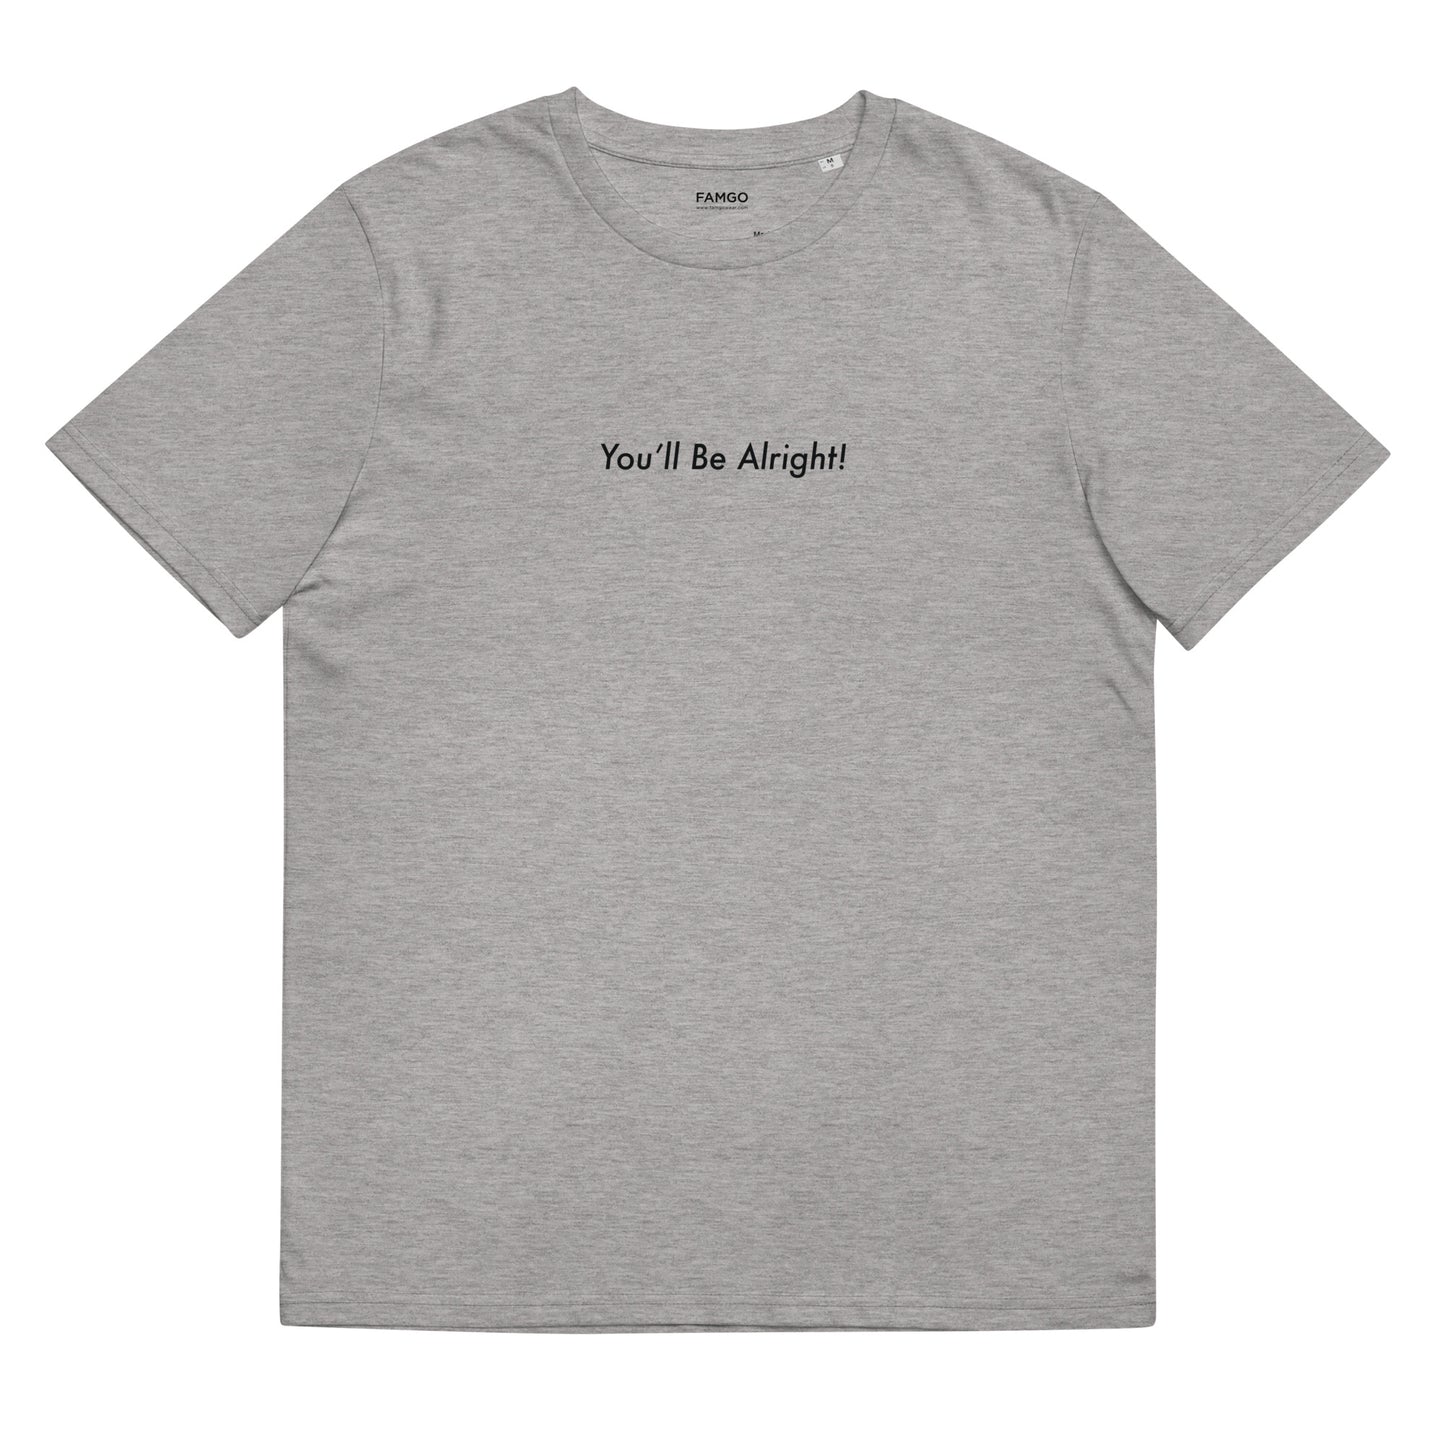 You'll Be Alright! Men's 100% Organic Cotton T-Shirt